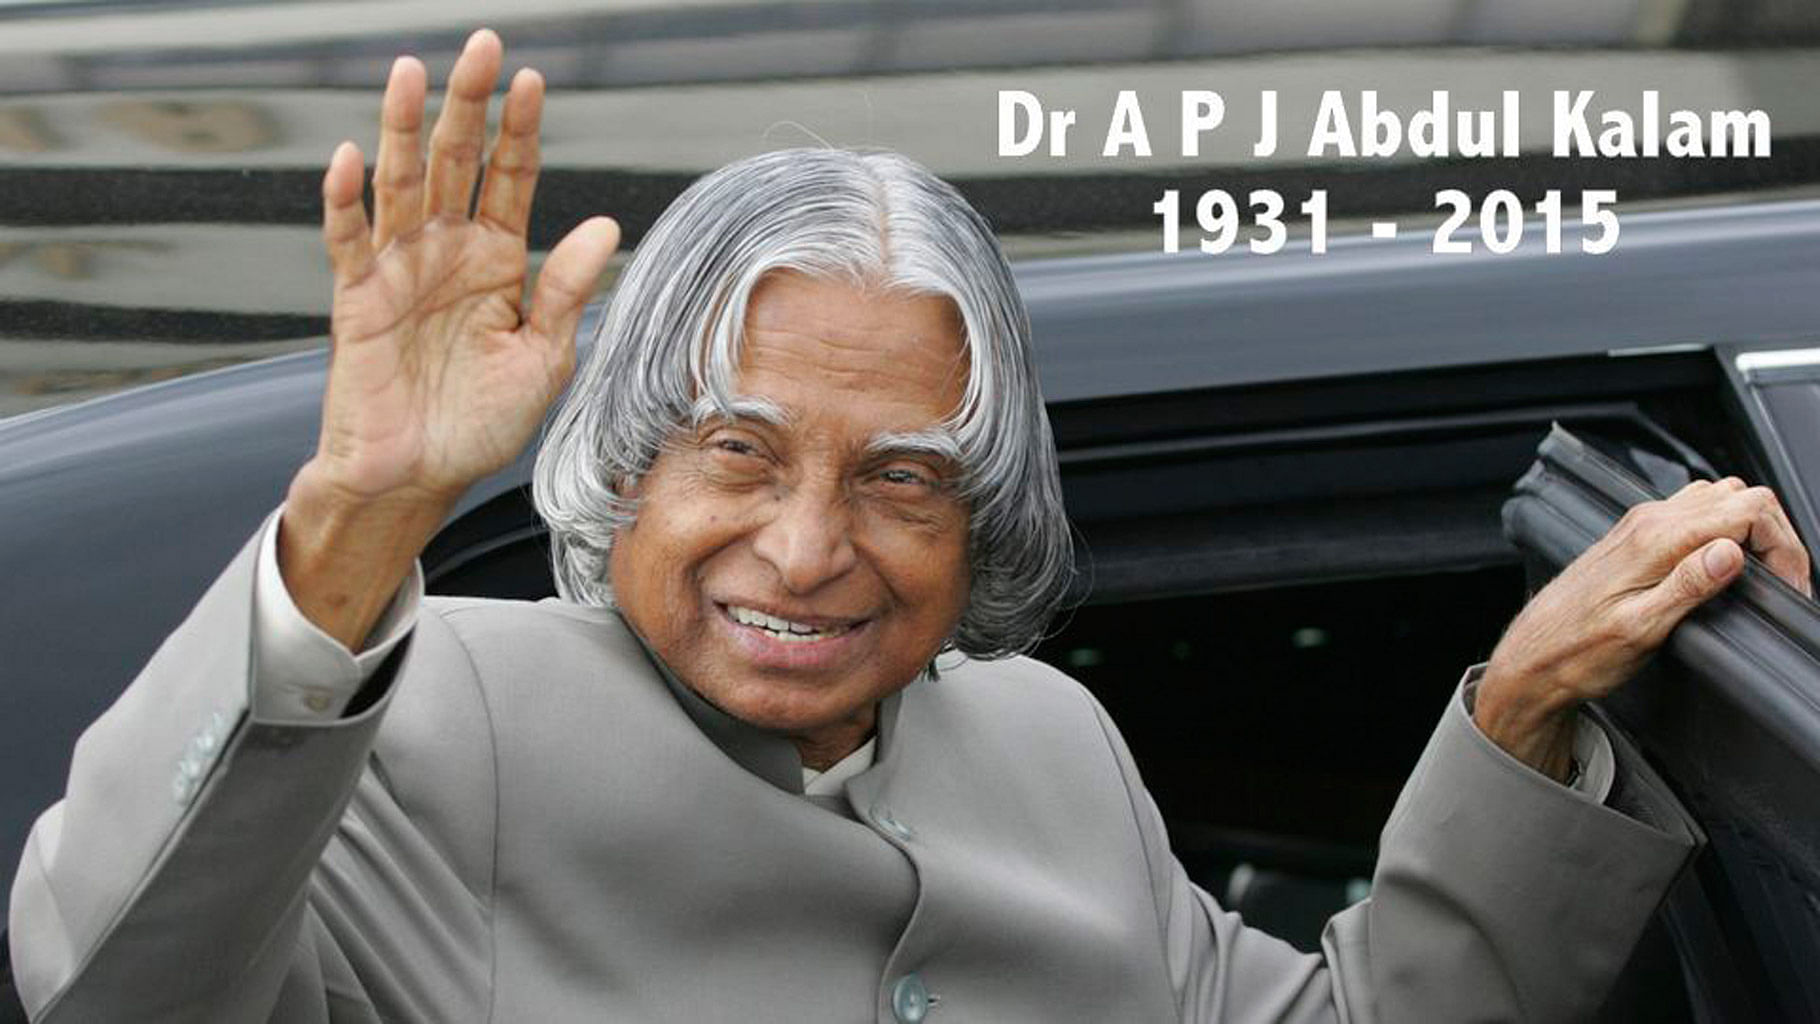  Late Dr APJ Abdul Kalam, former President of India. (Photo: Reuters)